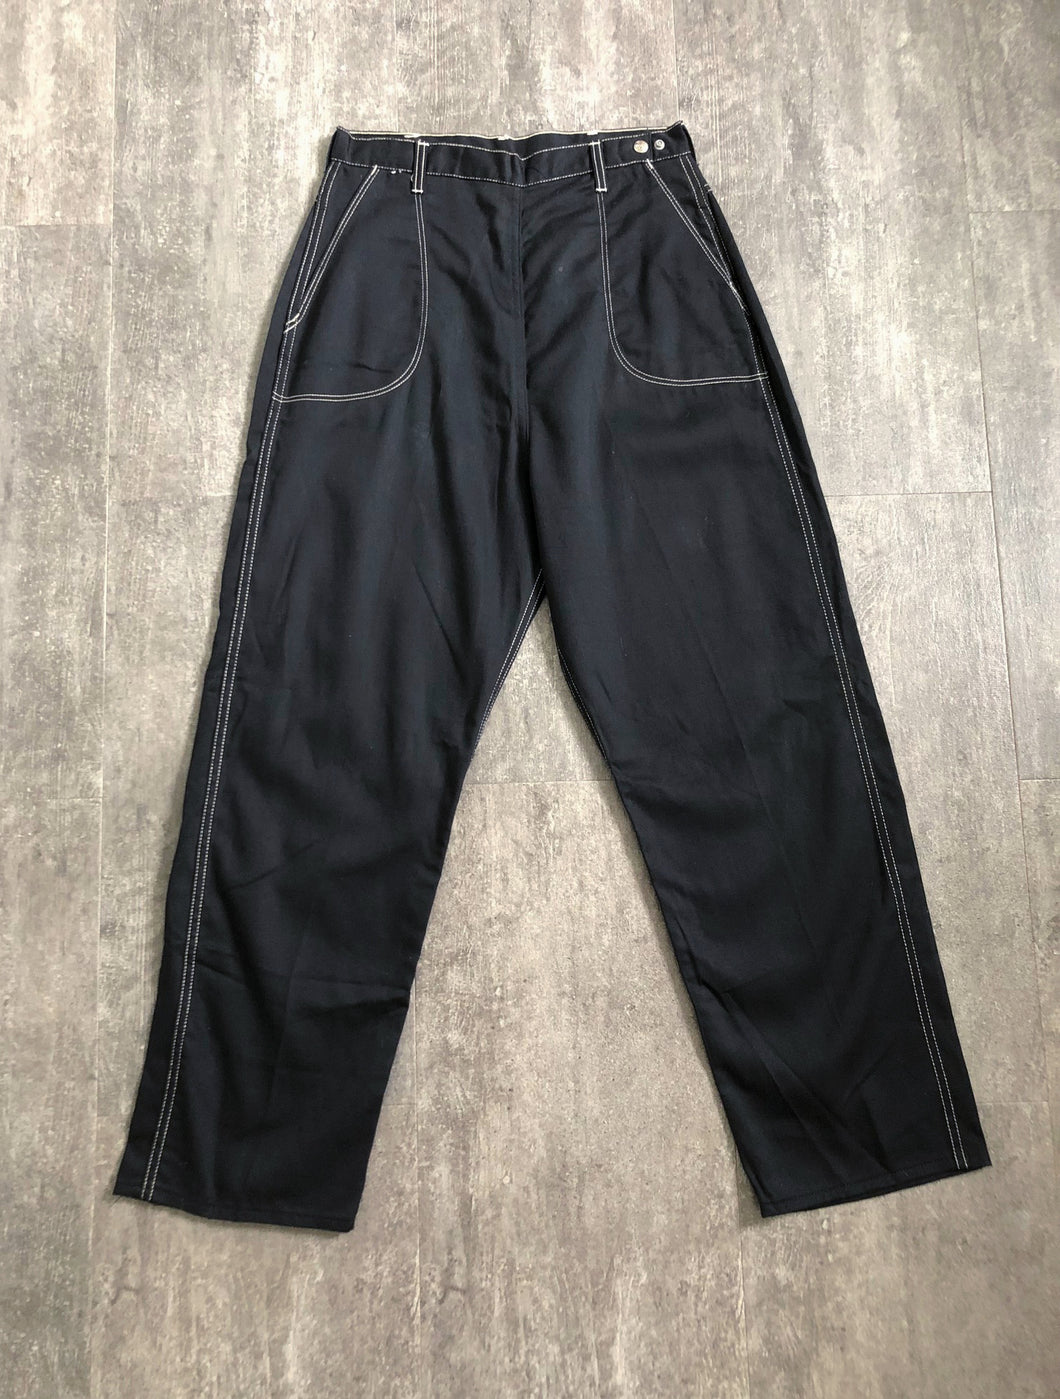 1950s deadstock jeans . black denim pants . 30-31 waist